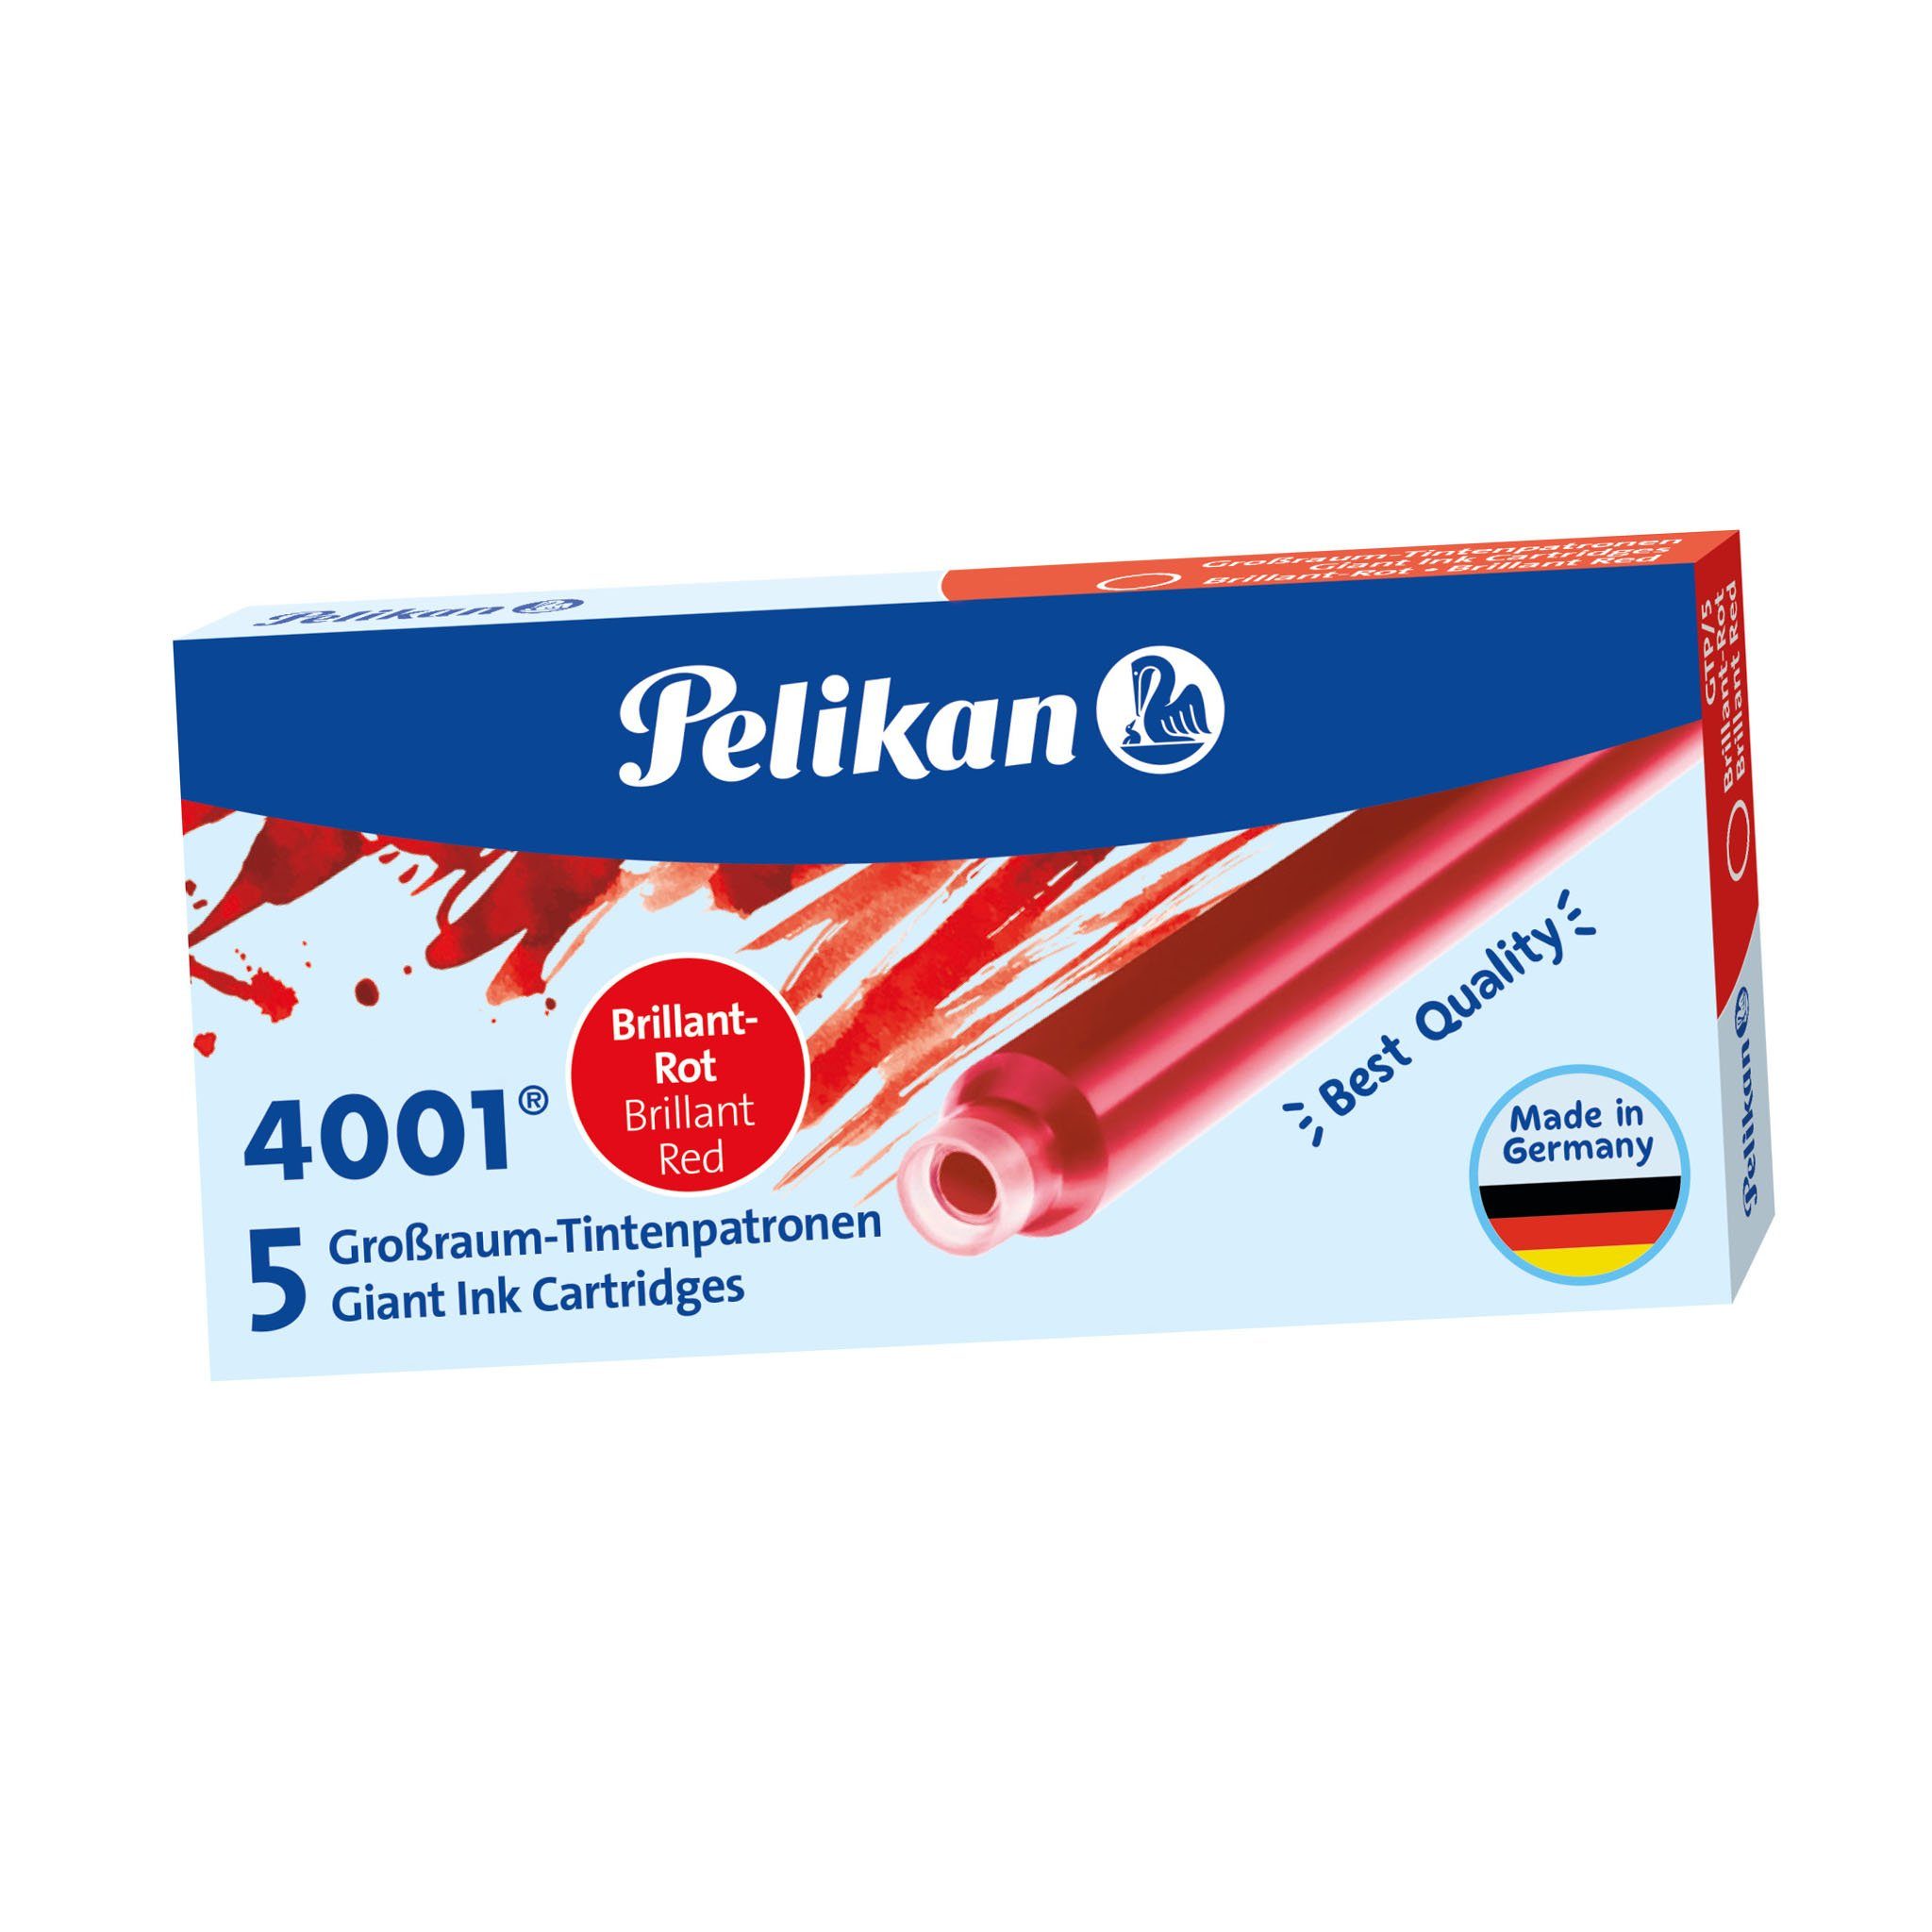 Pelikan Füllfederhalter Pelikan Großraum-Tintenpatronen 4001 GTP/5, rot